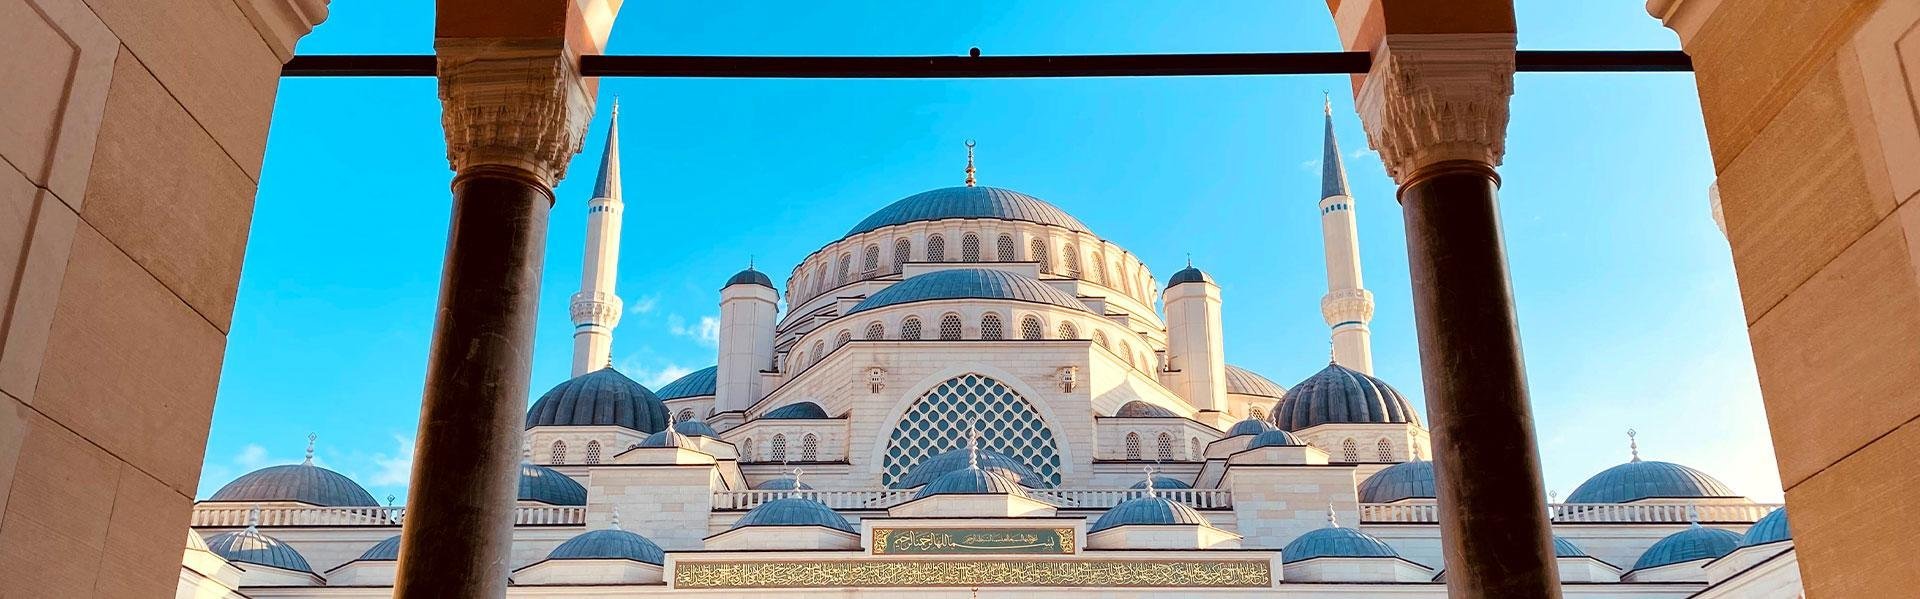 Ayasofya-moskee in Istanbul, Turkije